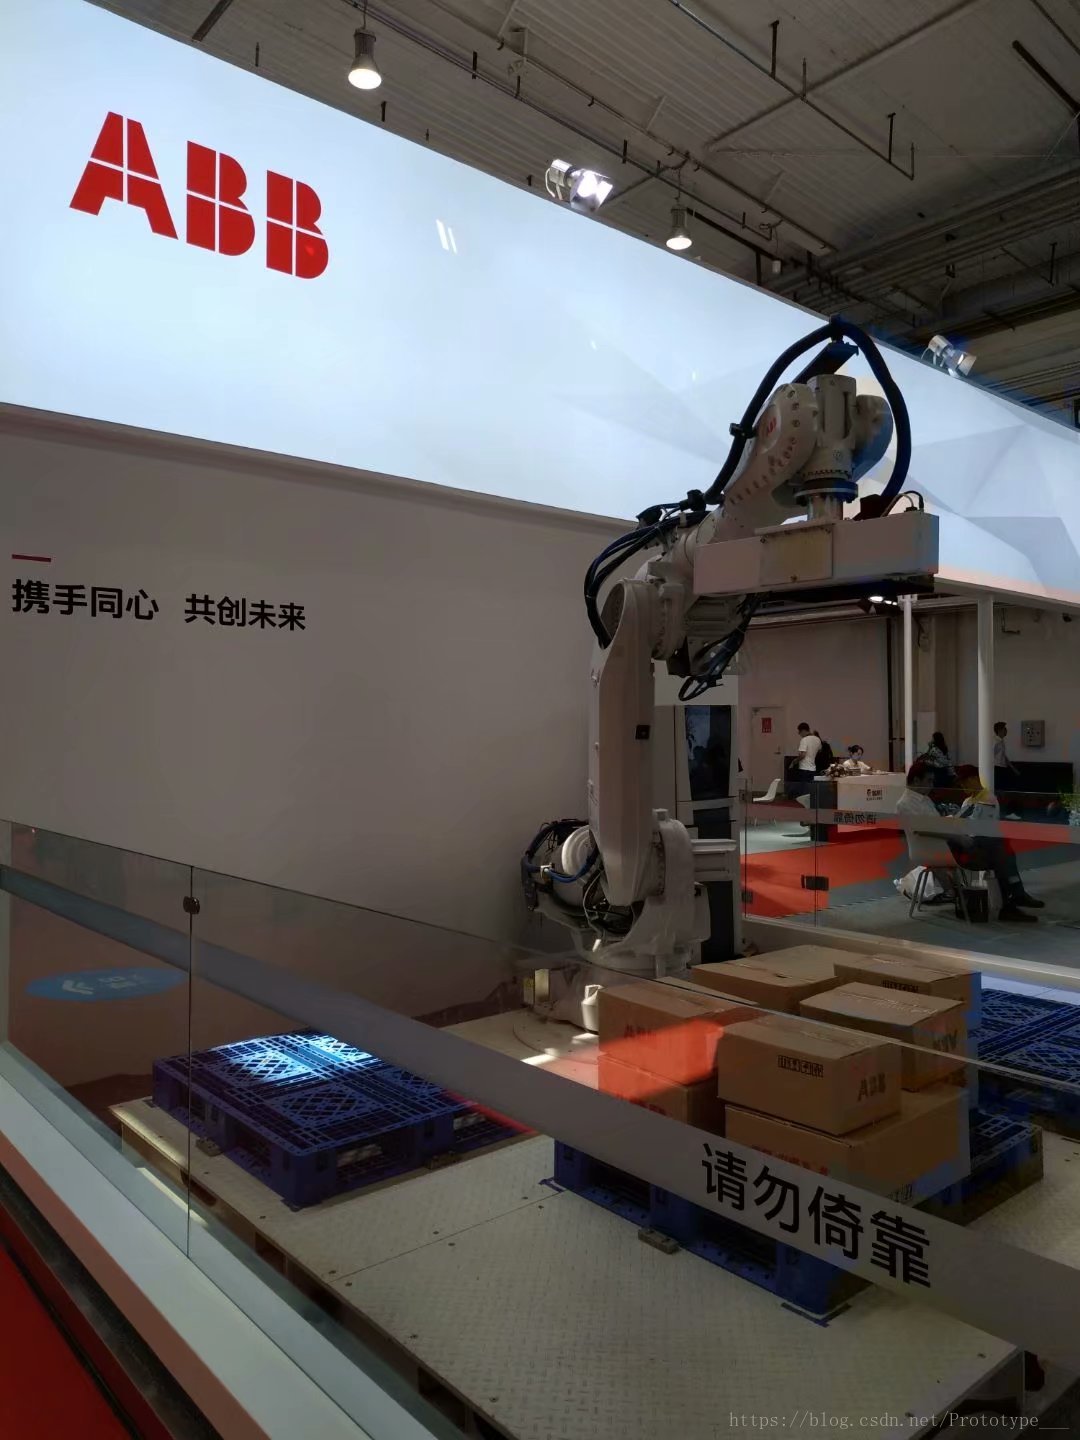 ABB集團的工業機器人